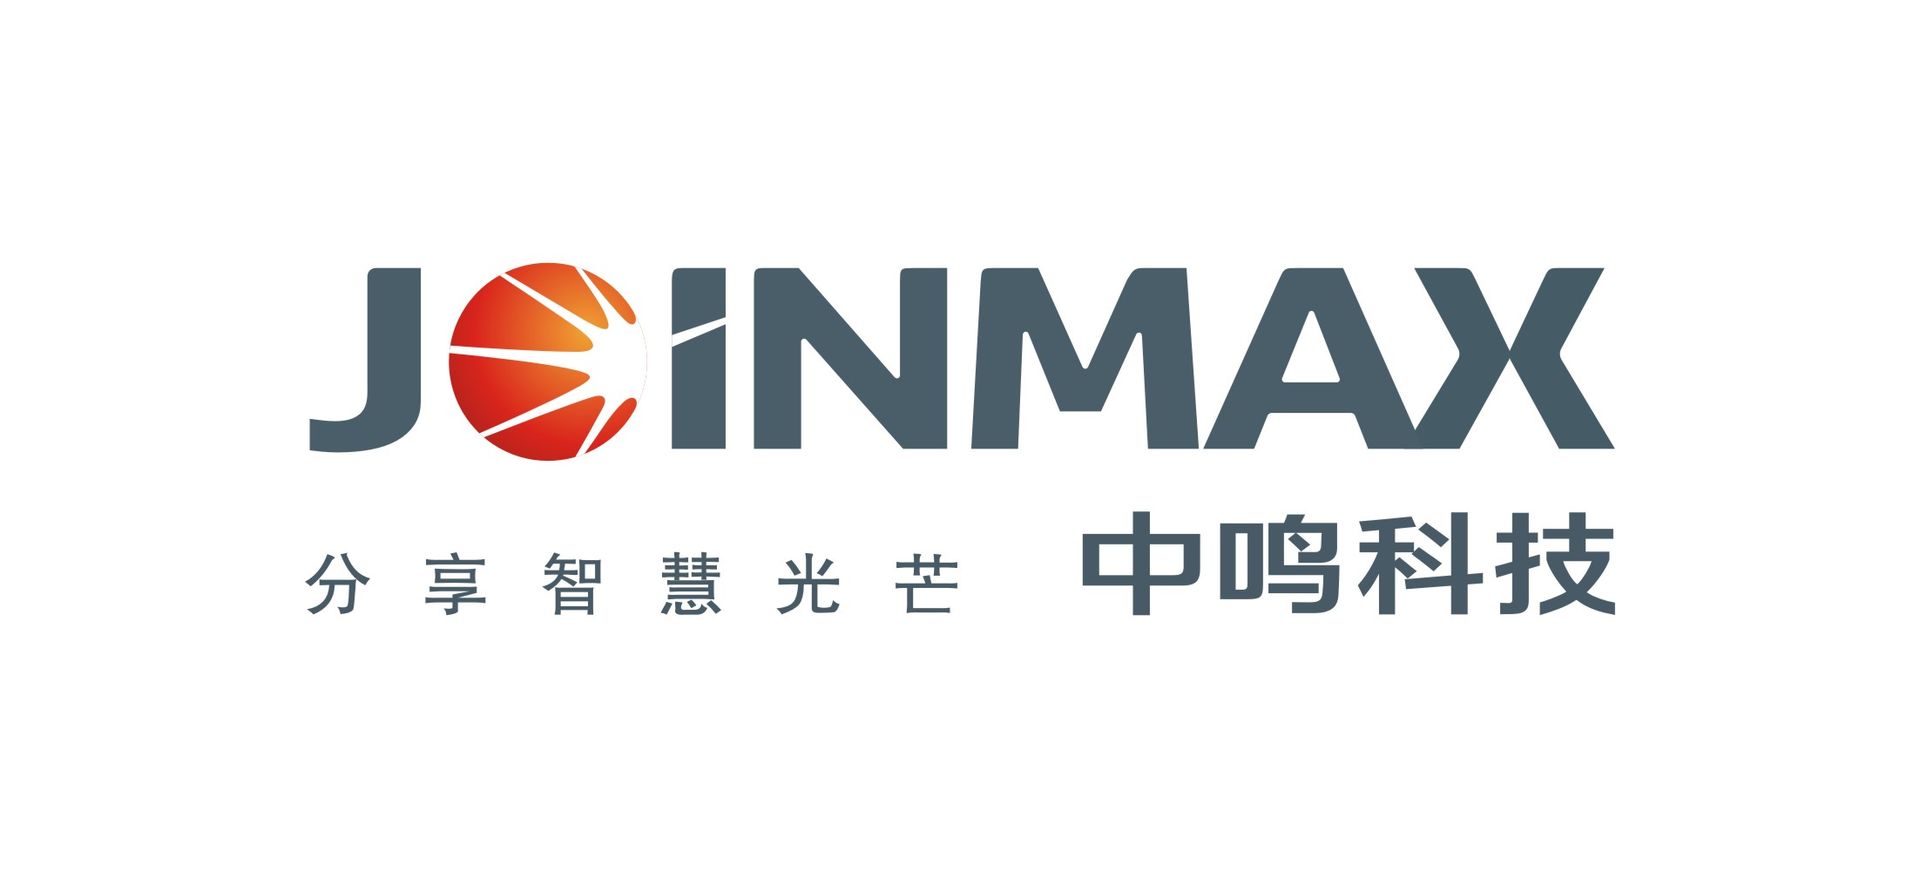 Joinmax Display Technology Co., LTD logo